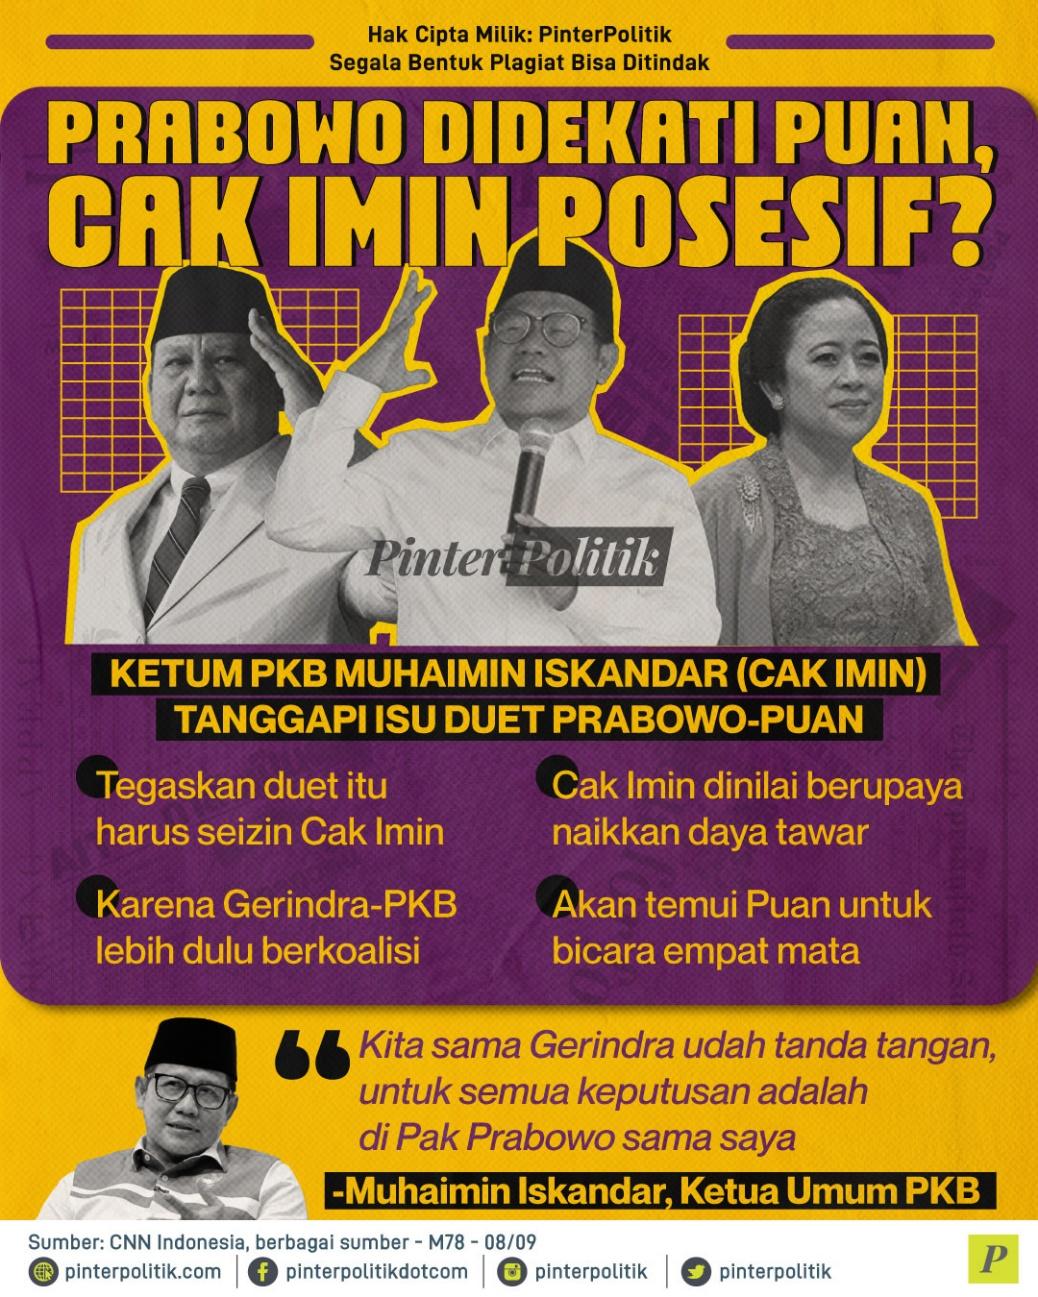 Prabowo Didekati Puan Cak Imin Posesif